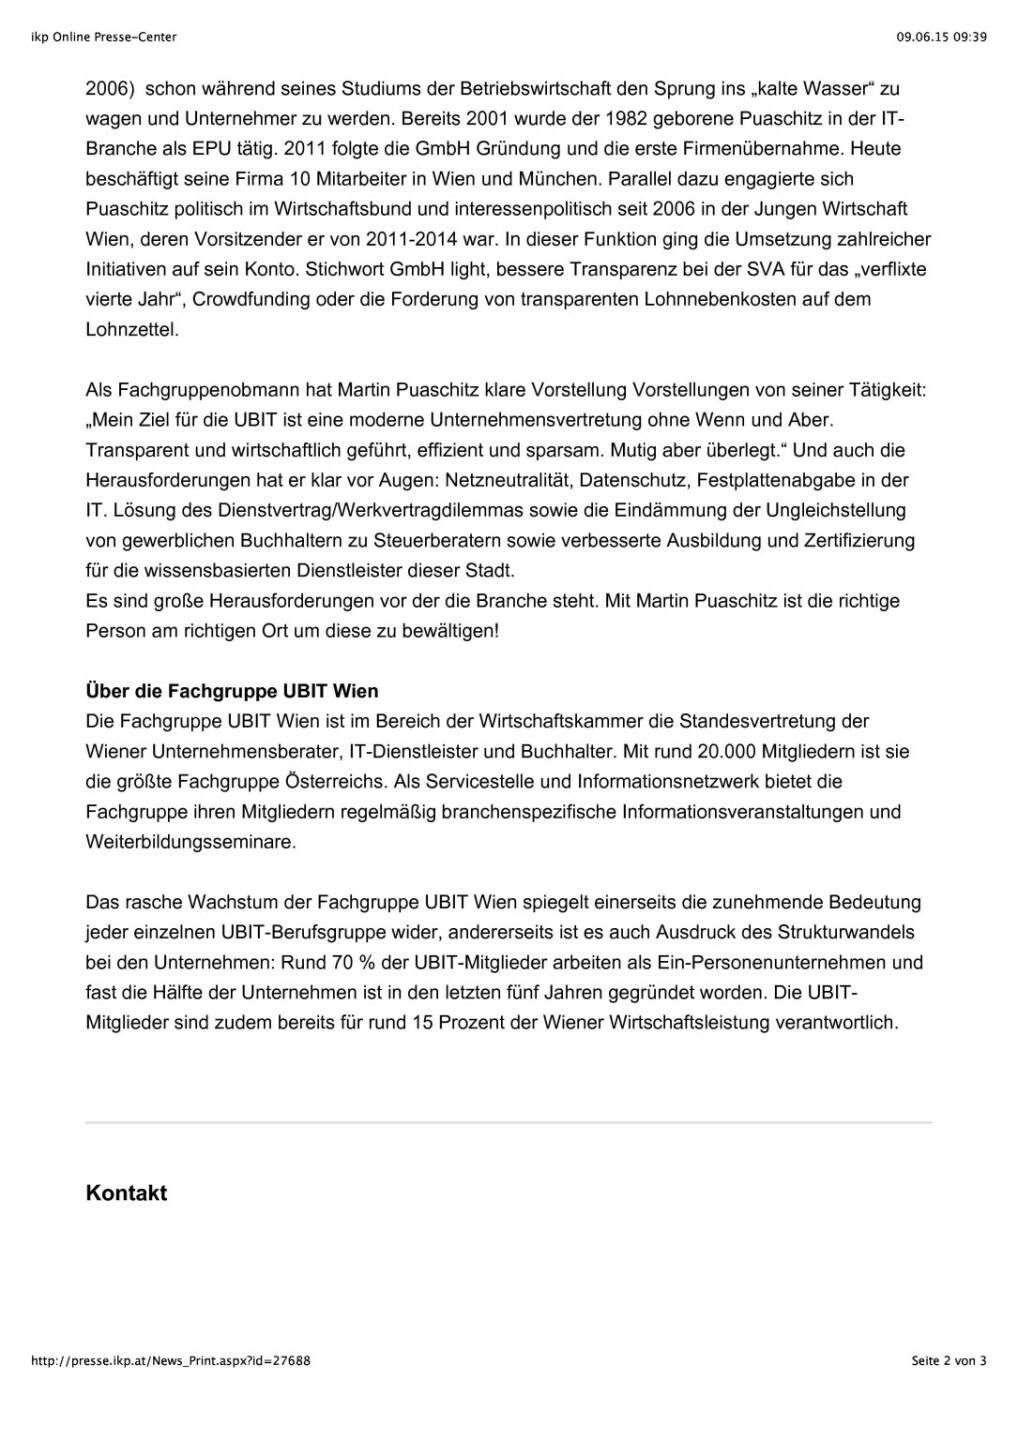 Martin Puaschitz neuer Obmann der Fachgruppe UBIT Wien, Seite 2/3, komplettes Dokument unter http://boerse-social.com/static/uploads/file_97_ubit-wien-chef.pdf